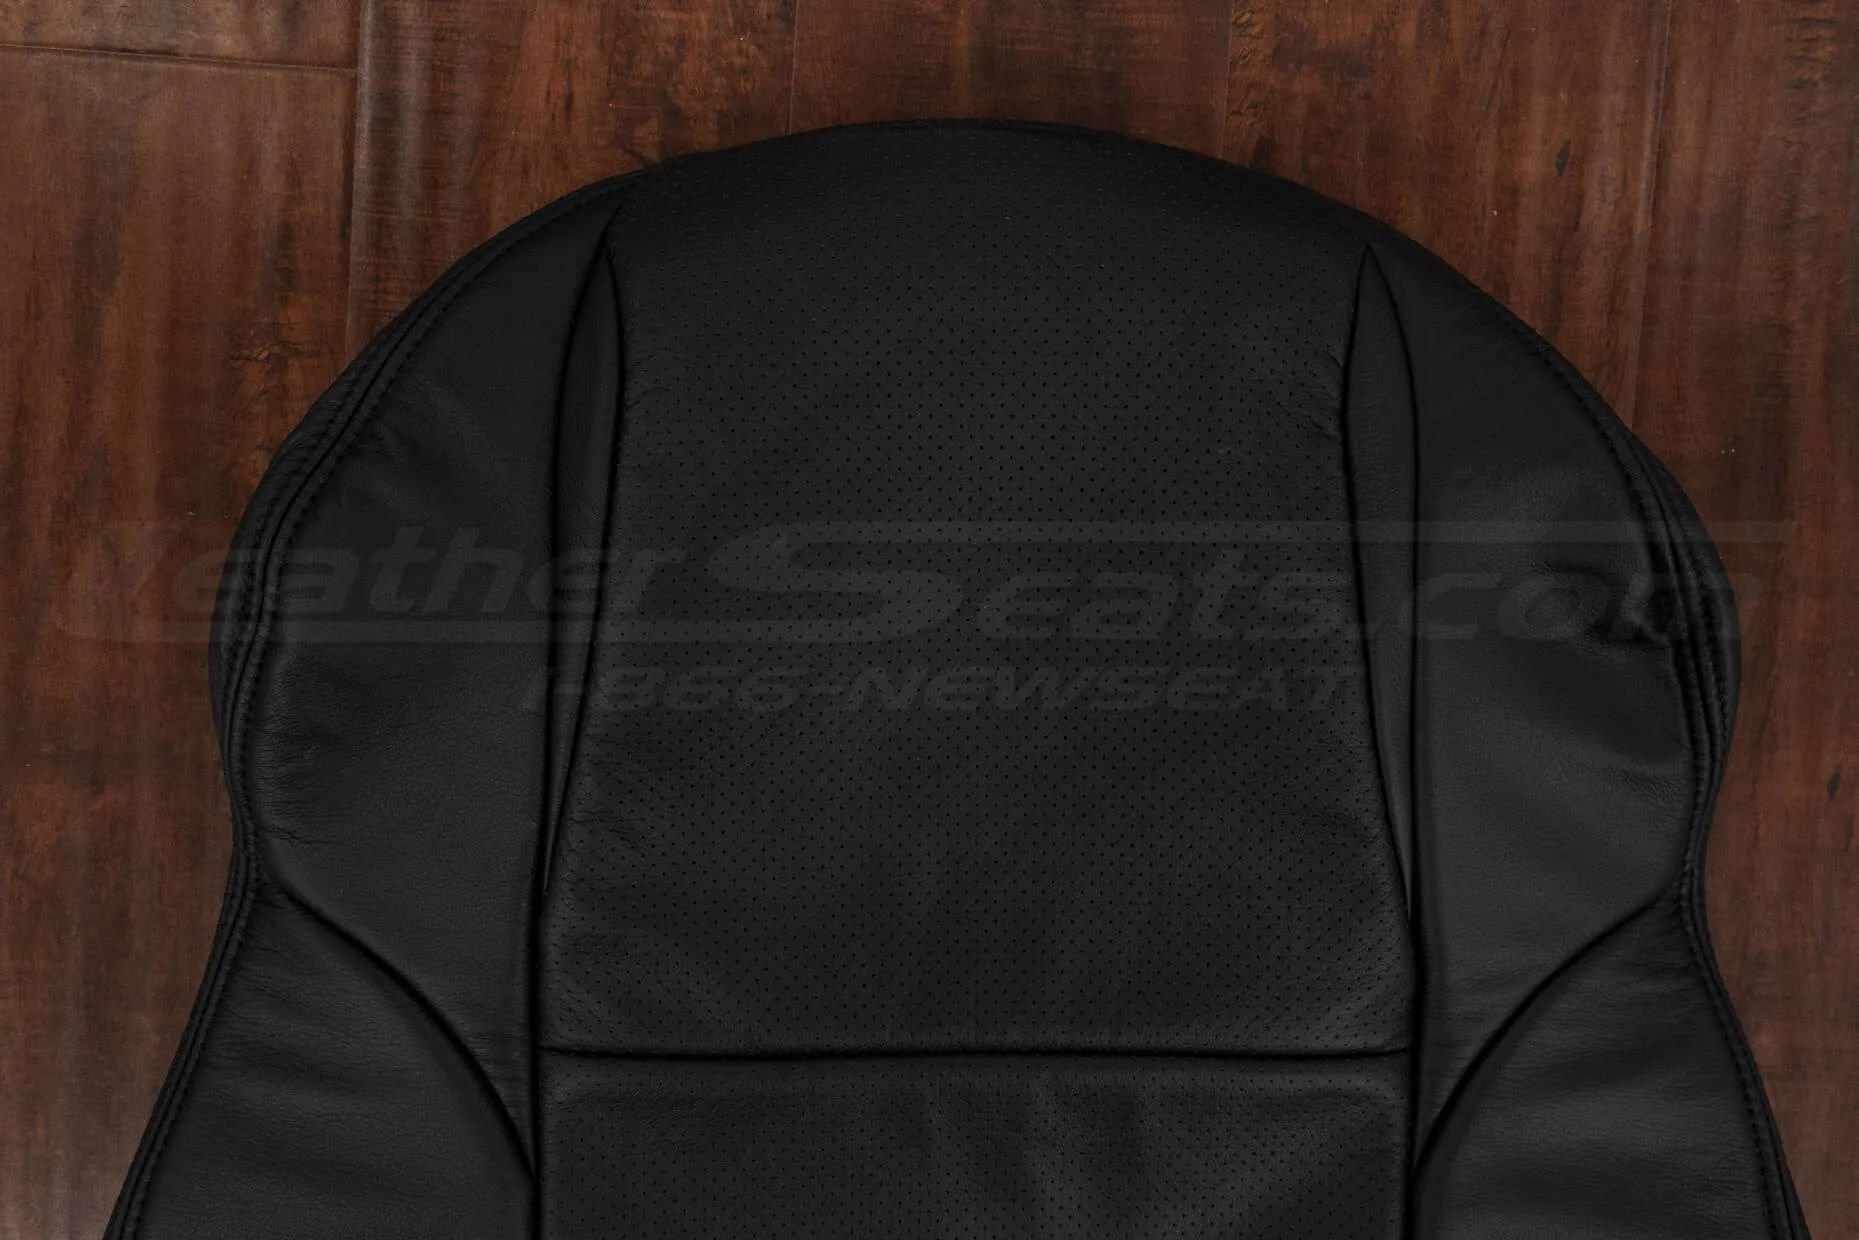 04-06 Pontiac GTO Leather Kit - Ecstasy Black - Top backrest insert & perforation